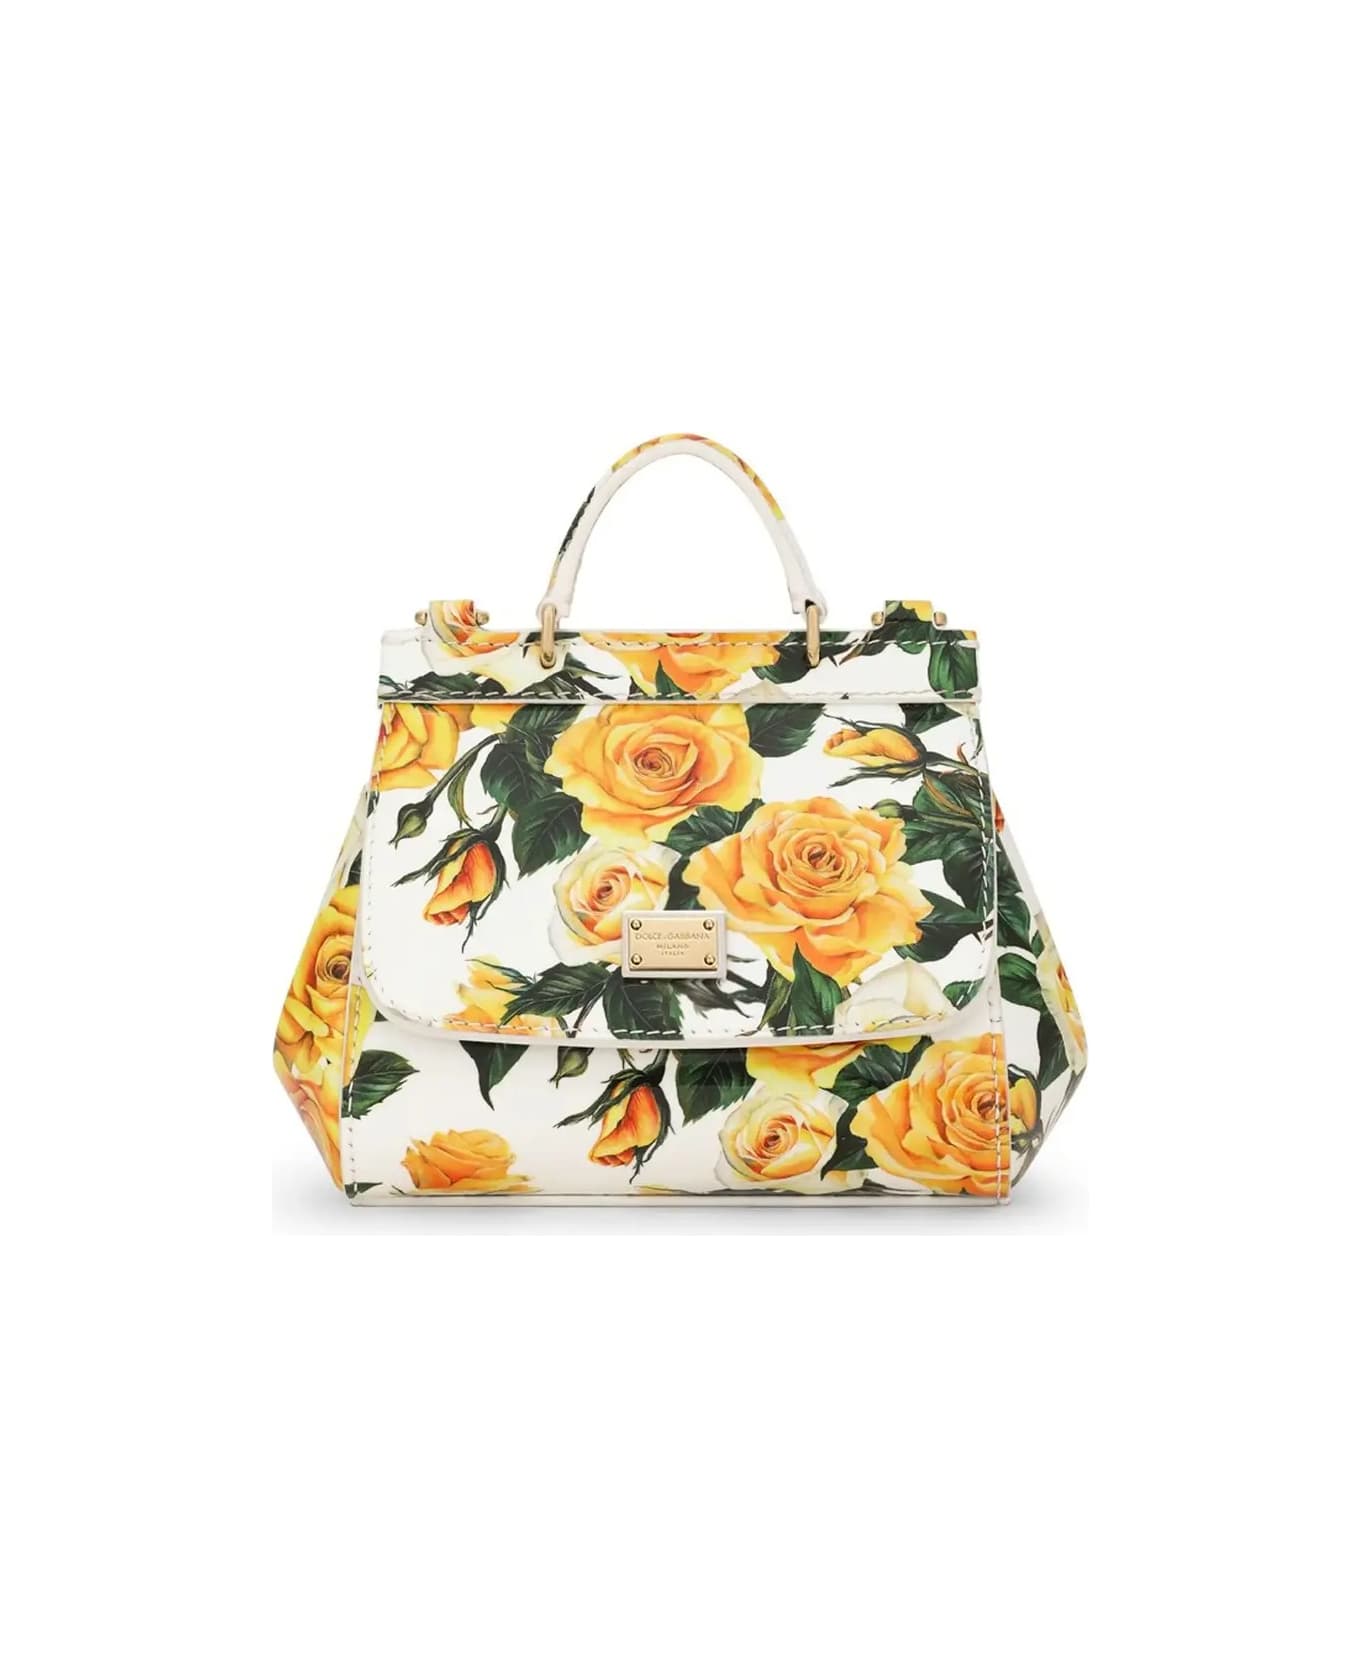 Dolce & Gabbana Sicily Mini Hand Bag With Yellow Rose Print - Yellow